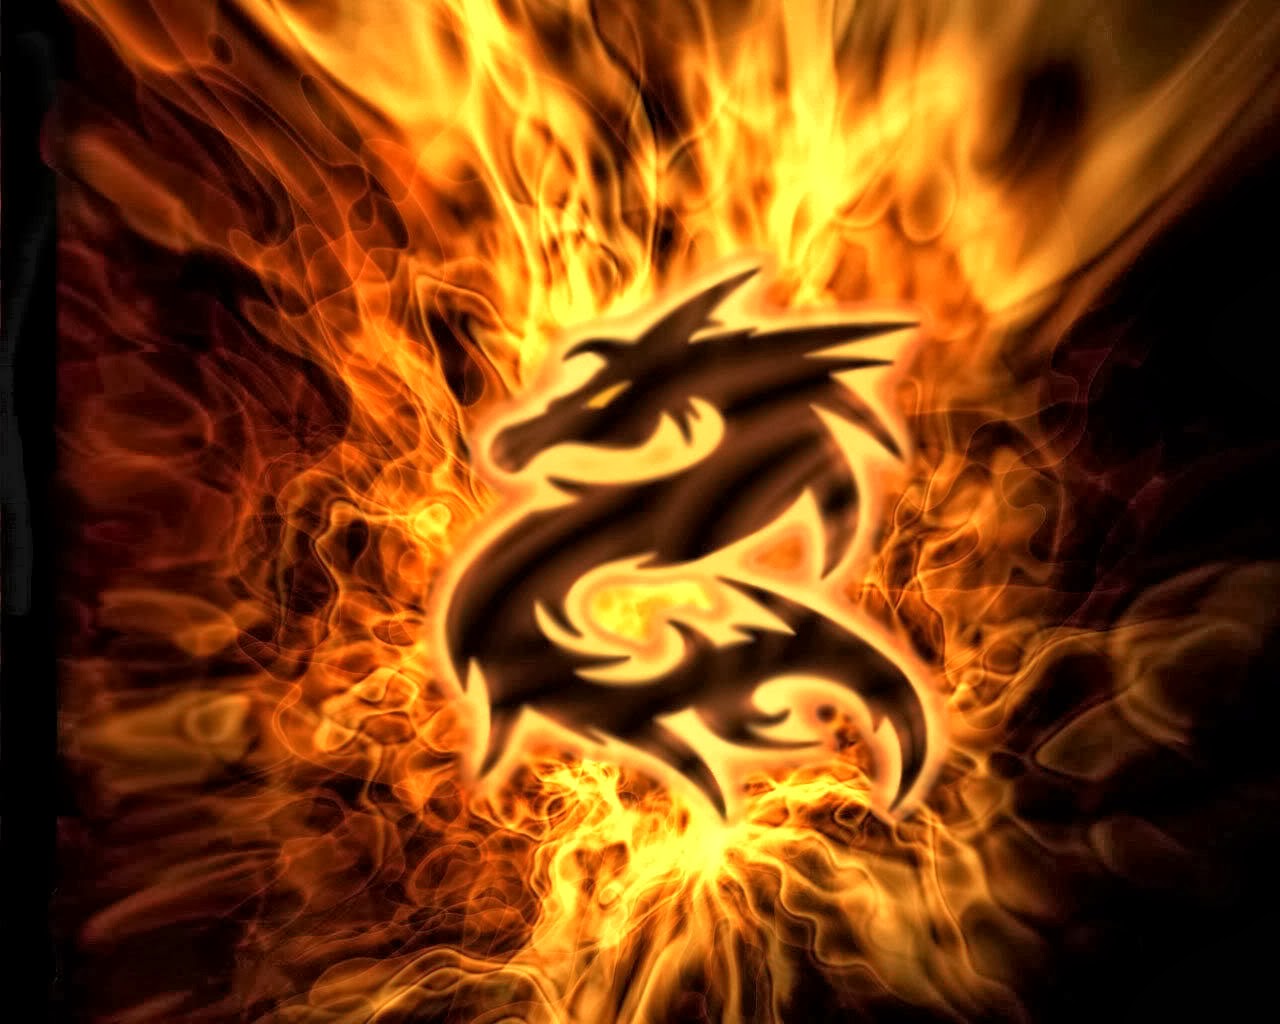 The Flaming Dragons